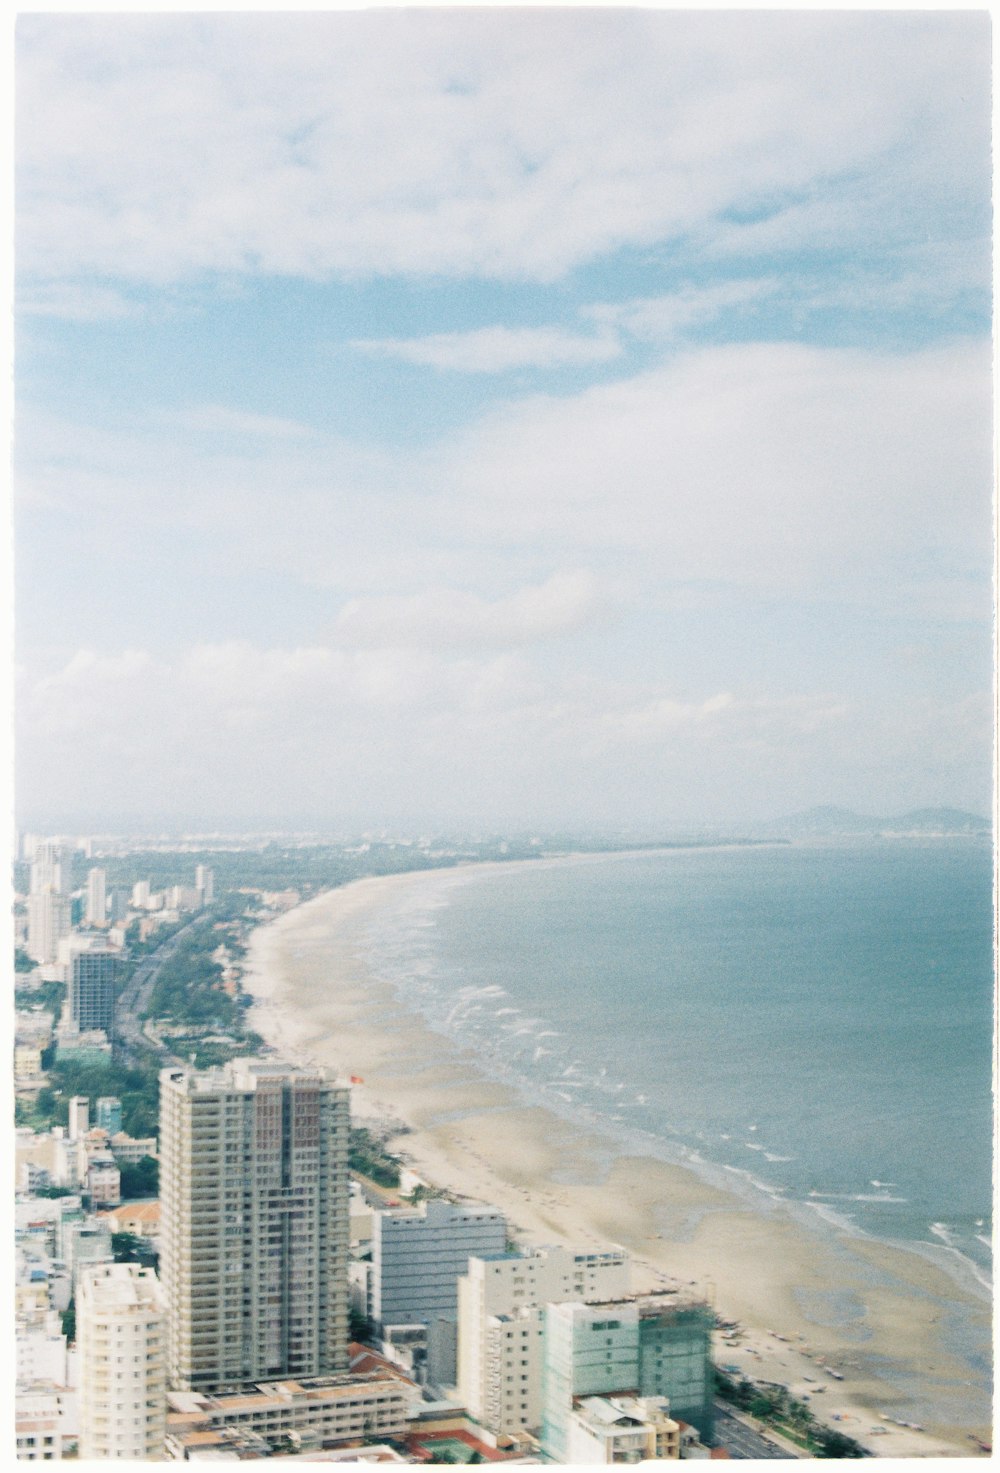 aerial photo of buildings near ocean during daytime